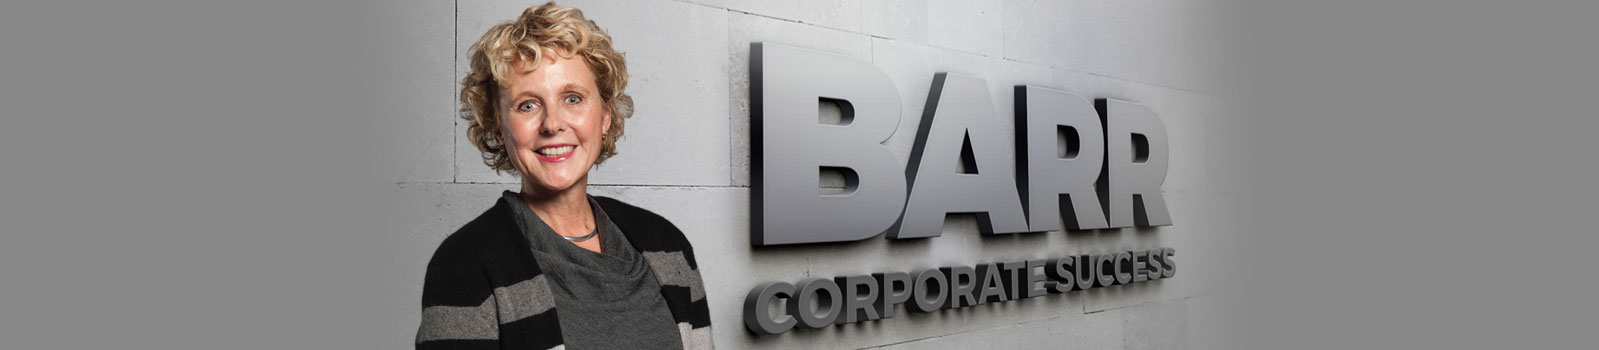 About Barr Corporate Success